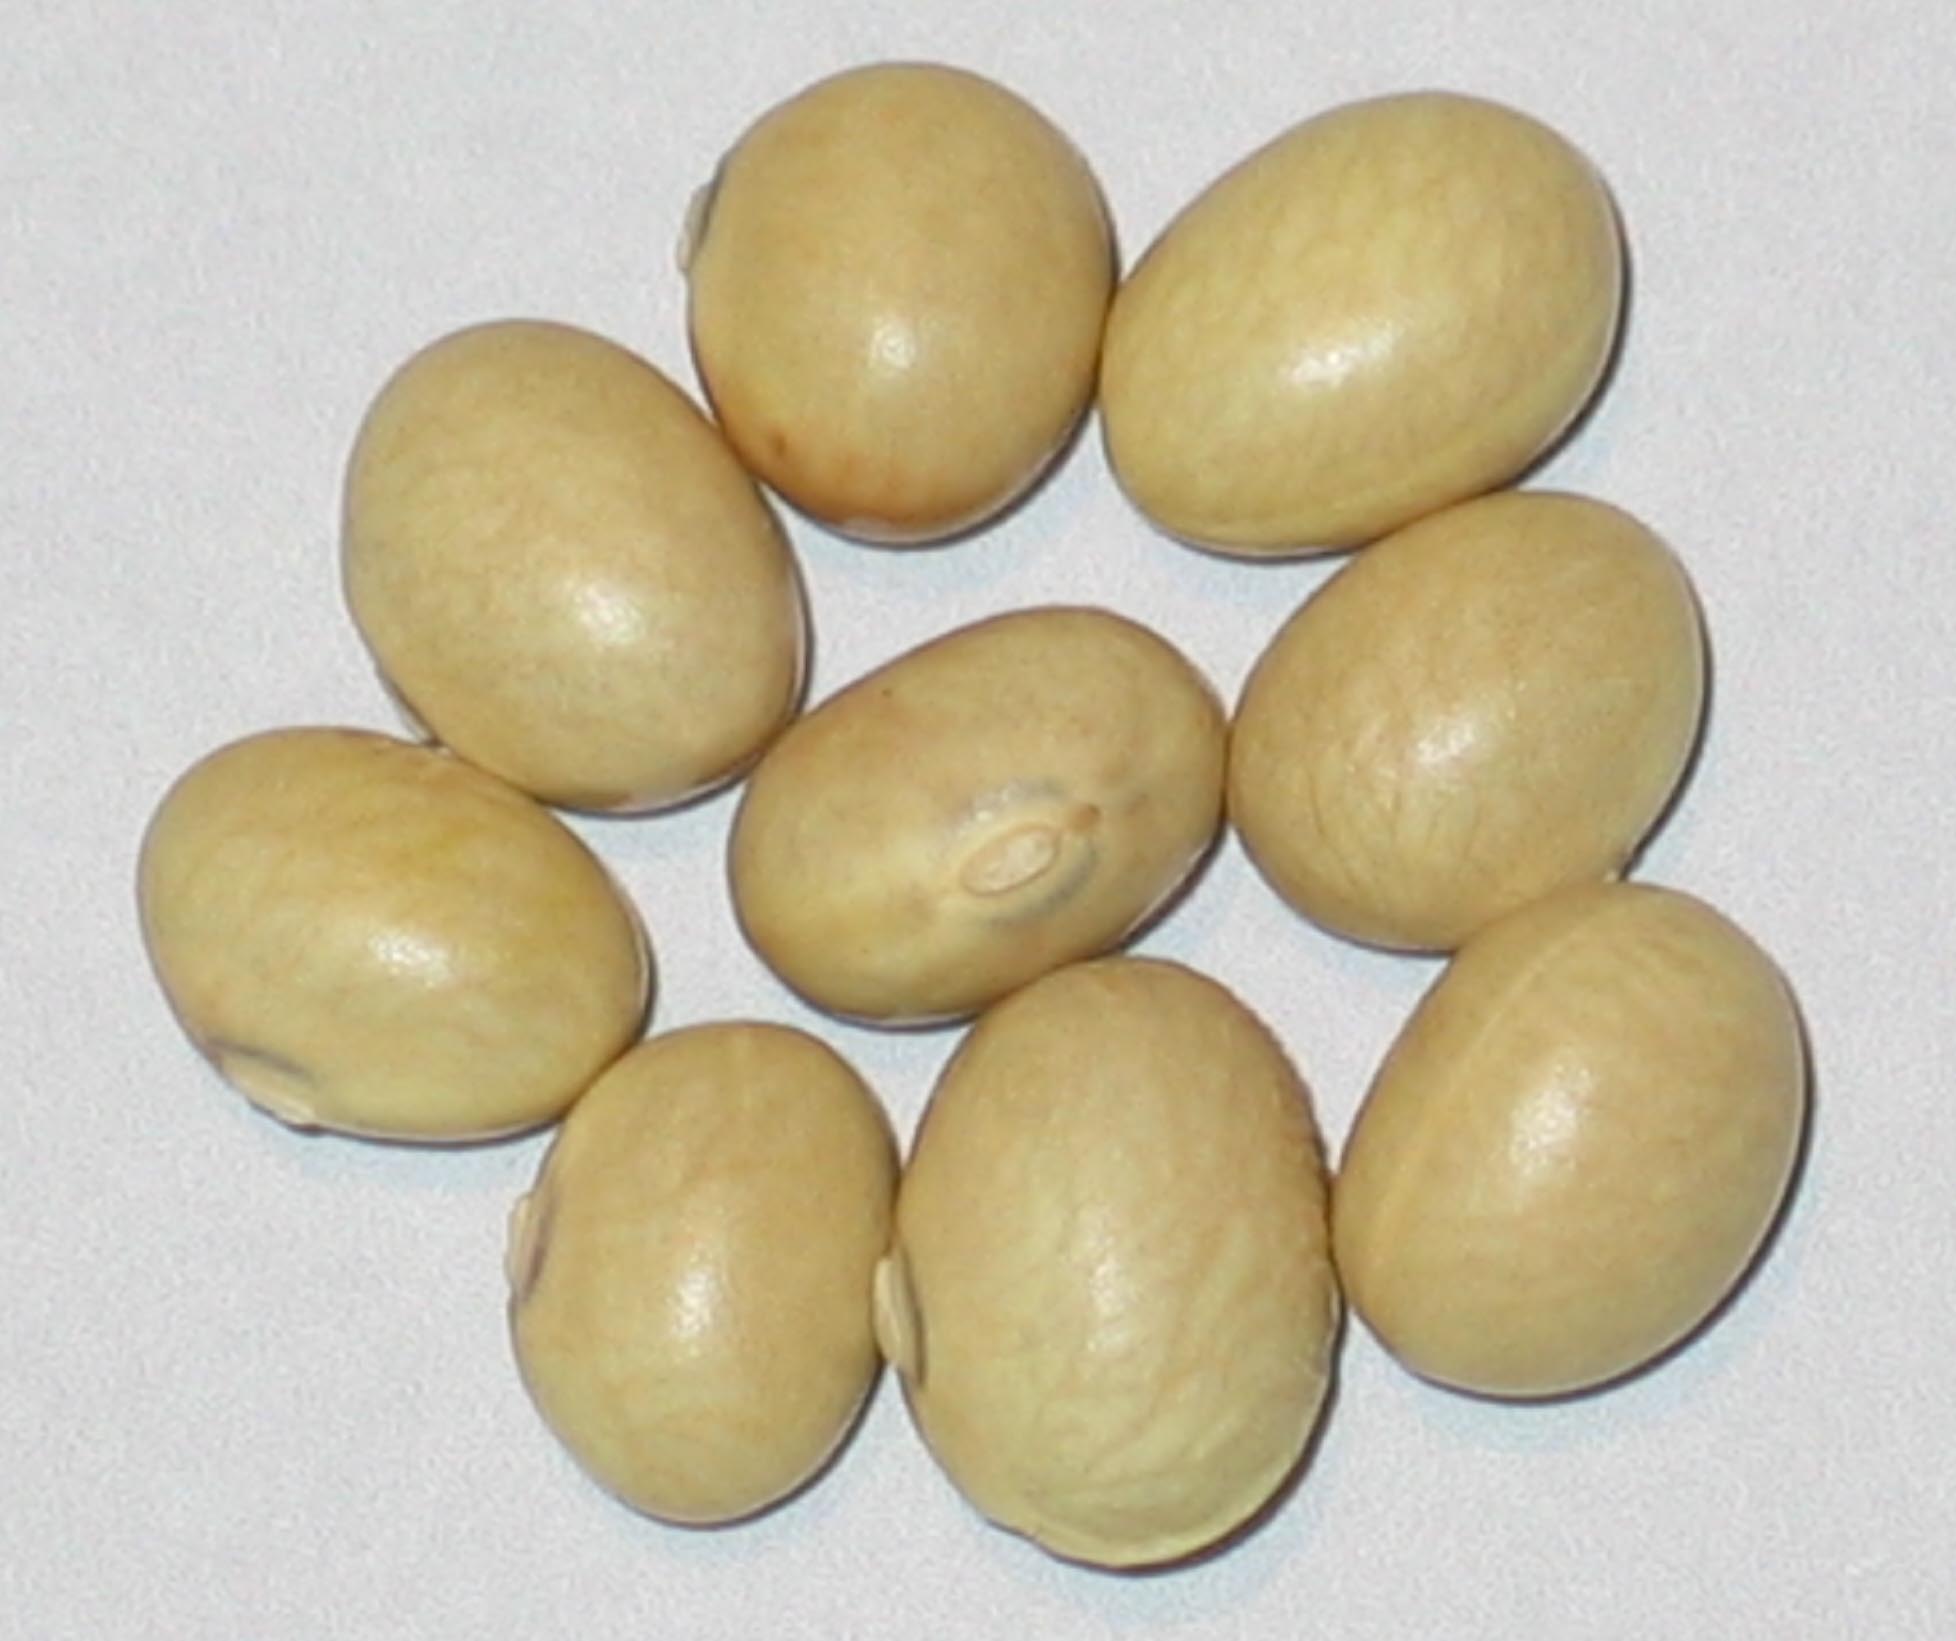 image of China Yellow beans